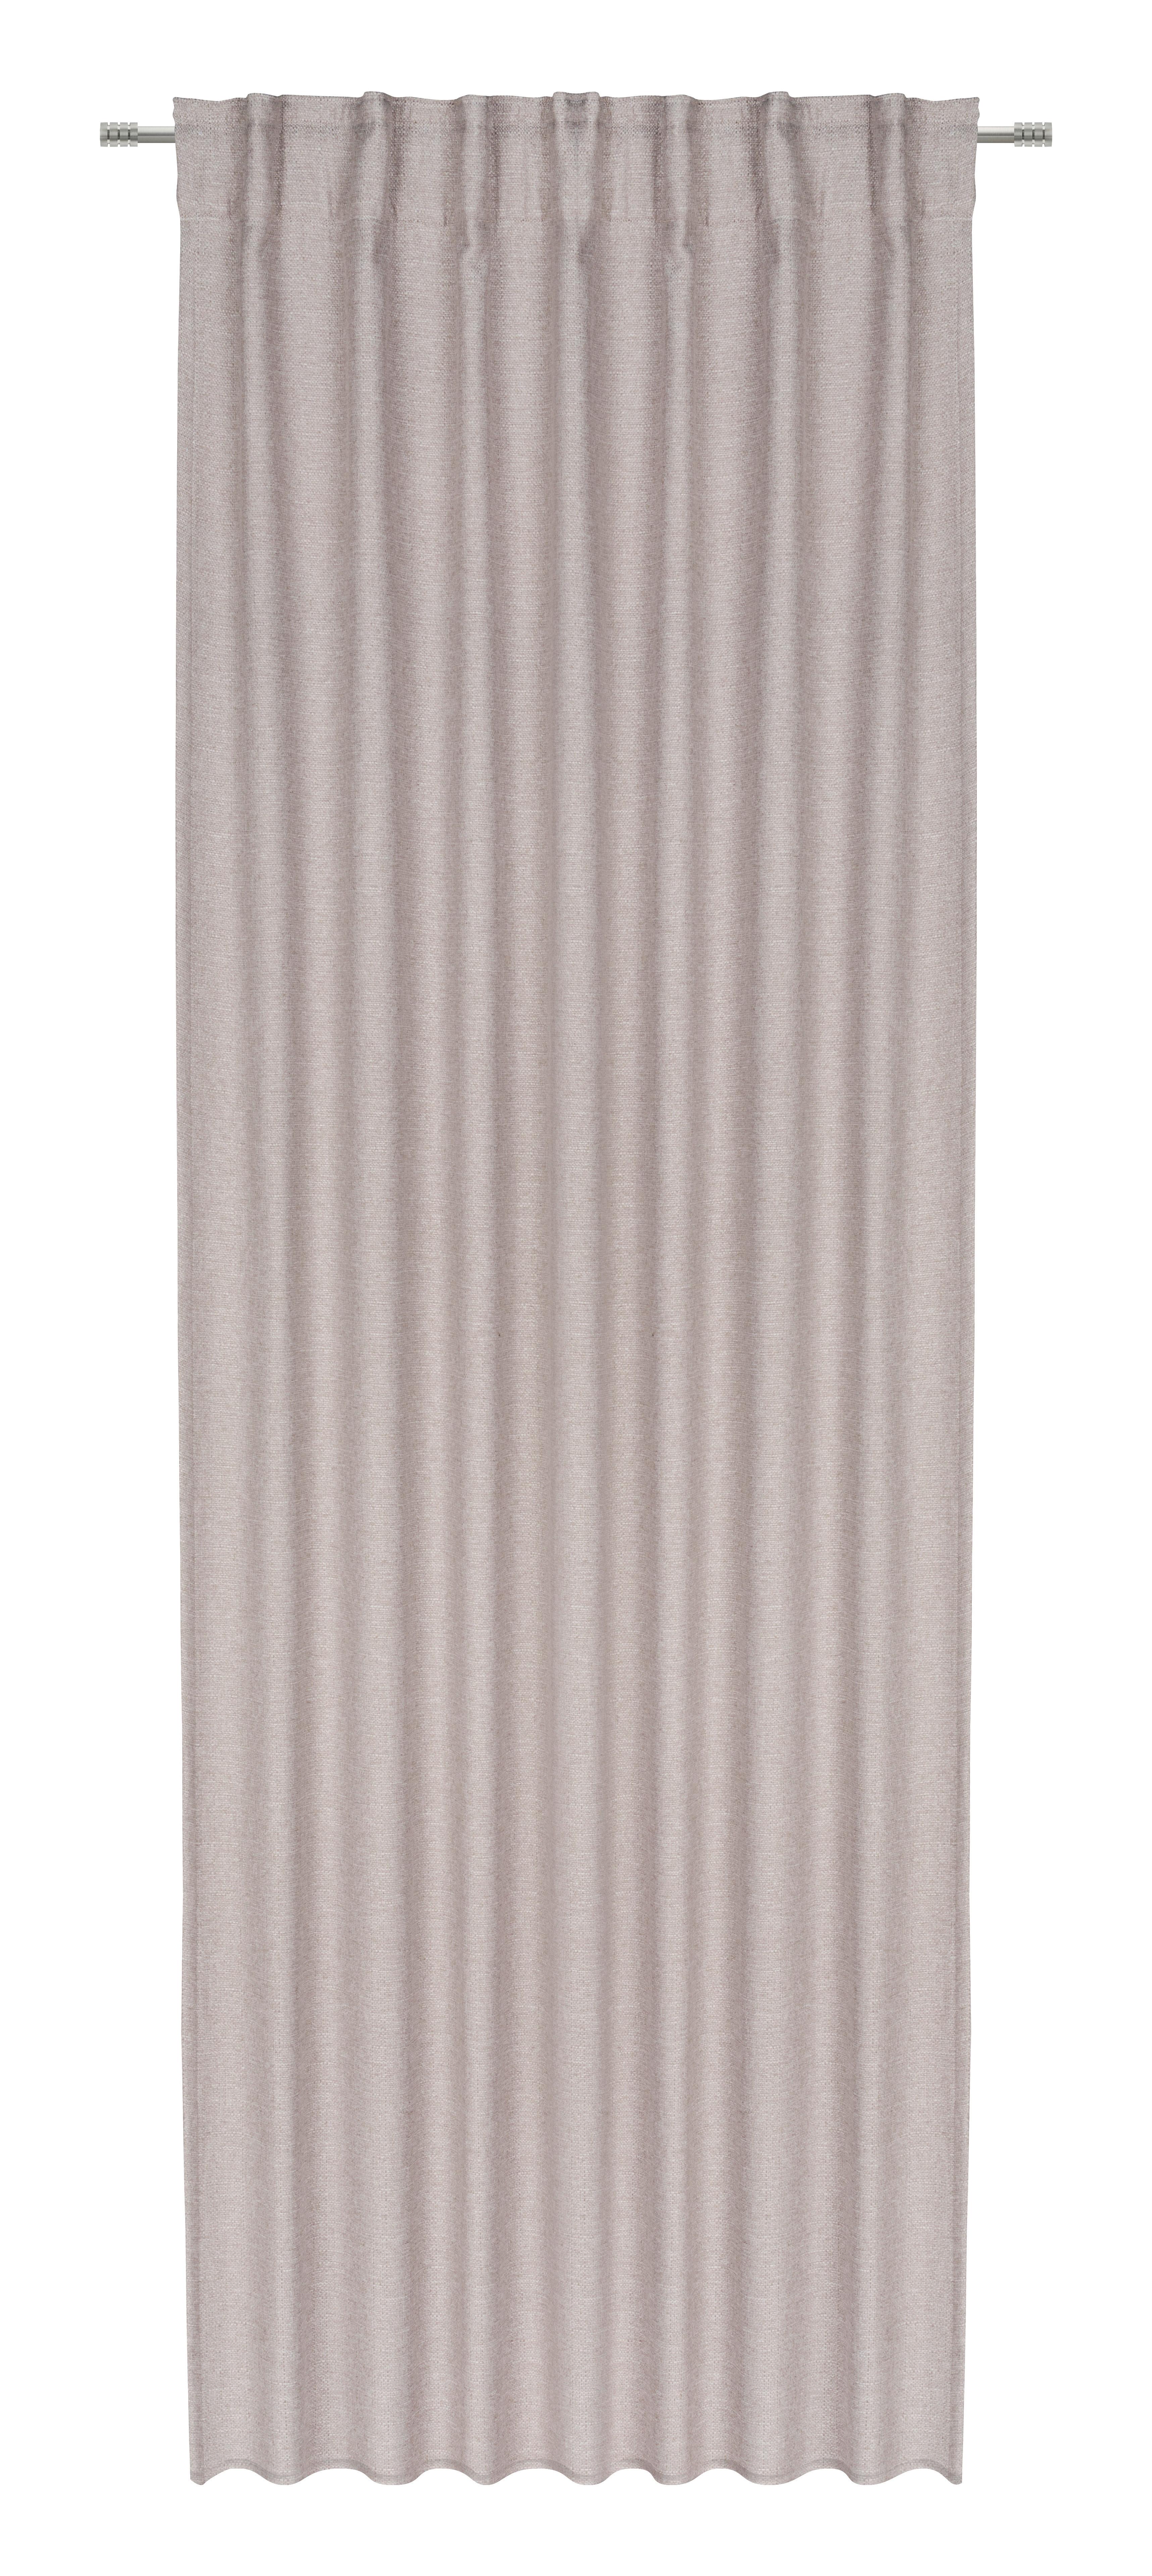 Gotova Zavjesa Alfi 135/255cm - bež, Konventionell, tekstil (135/255cm) - Modern Living